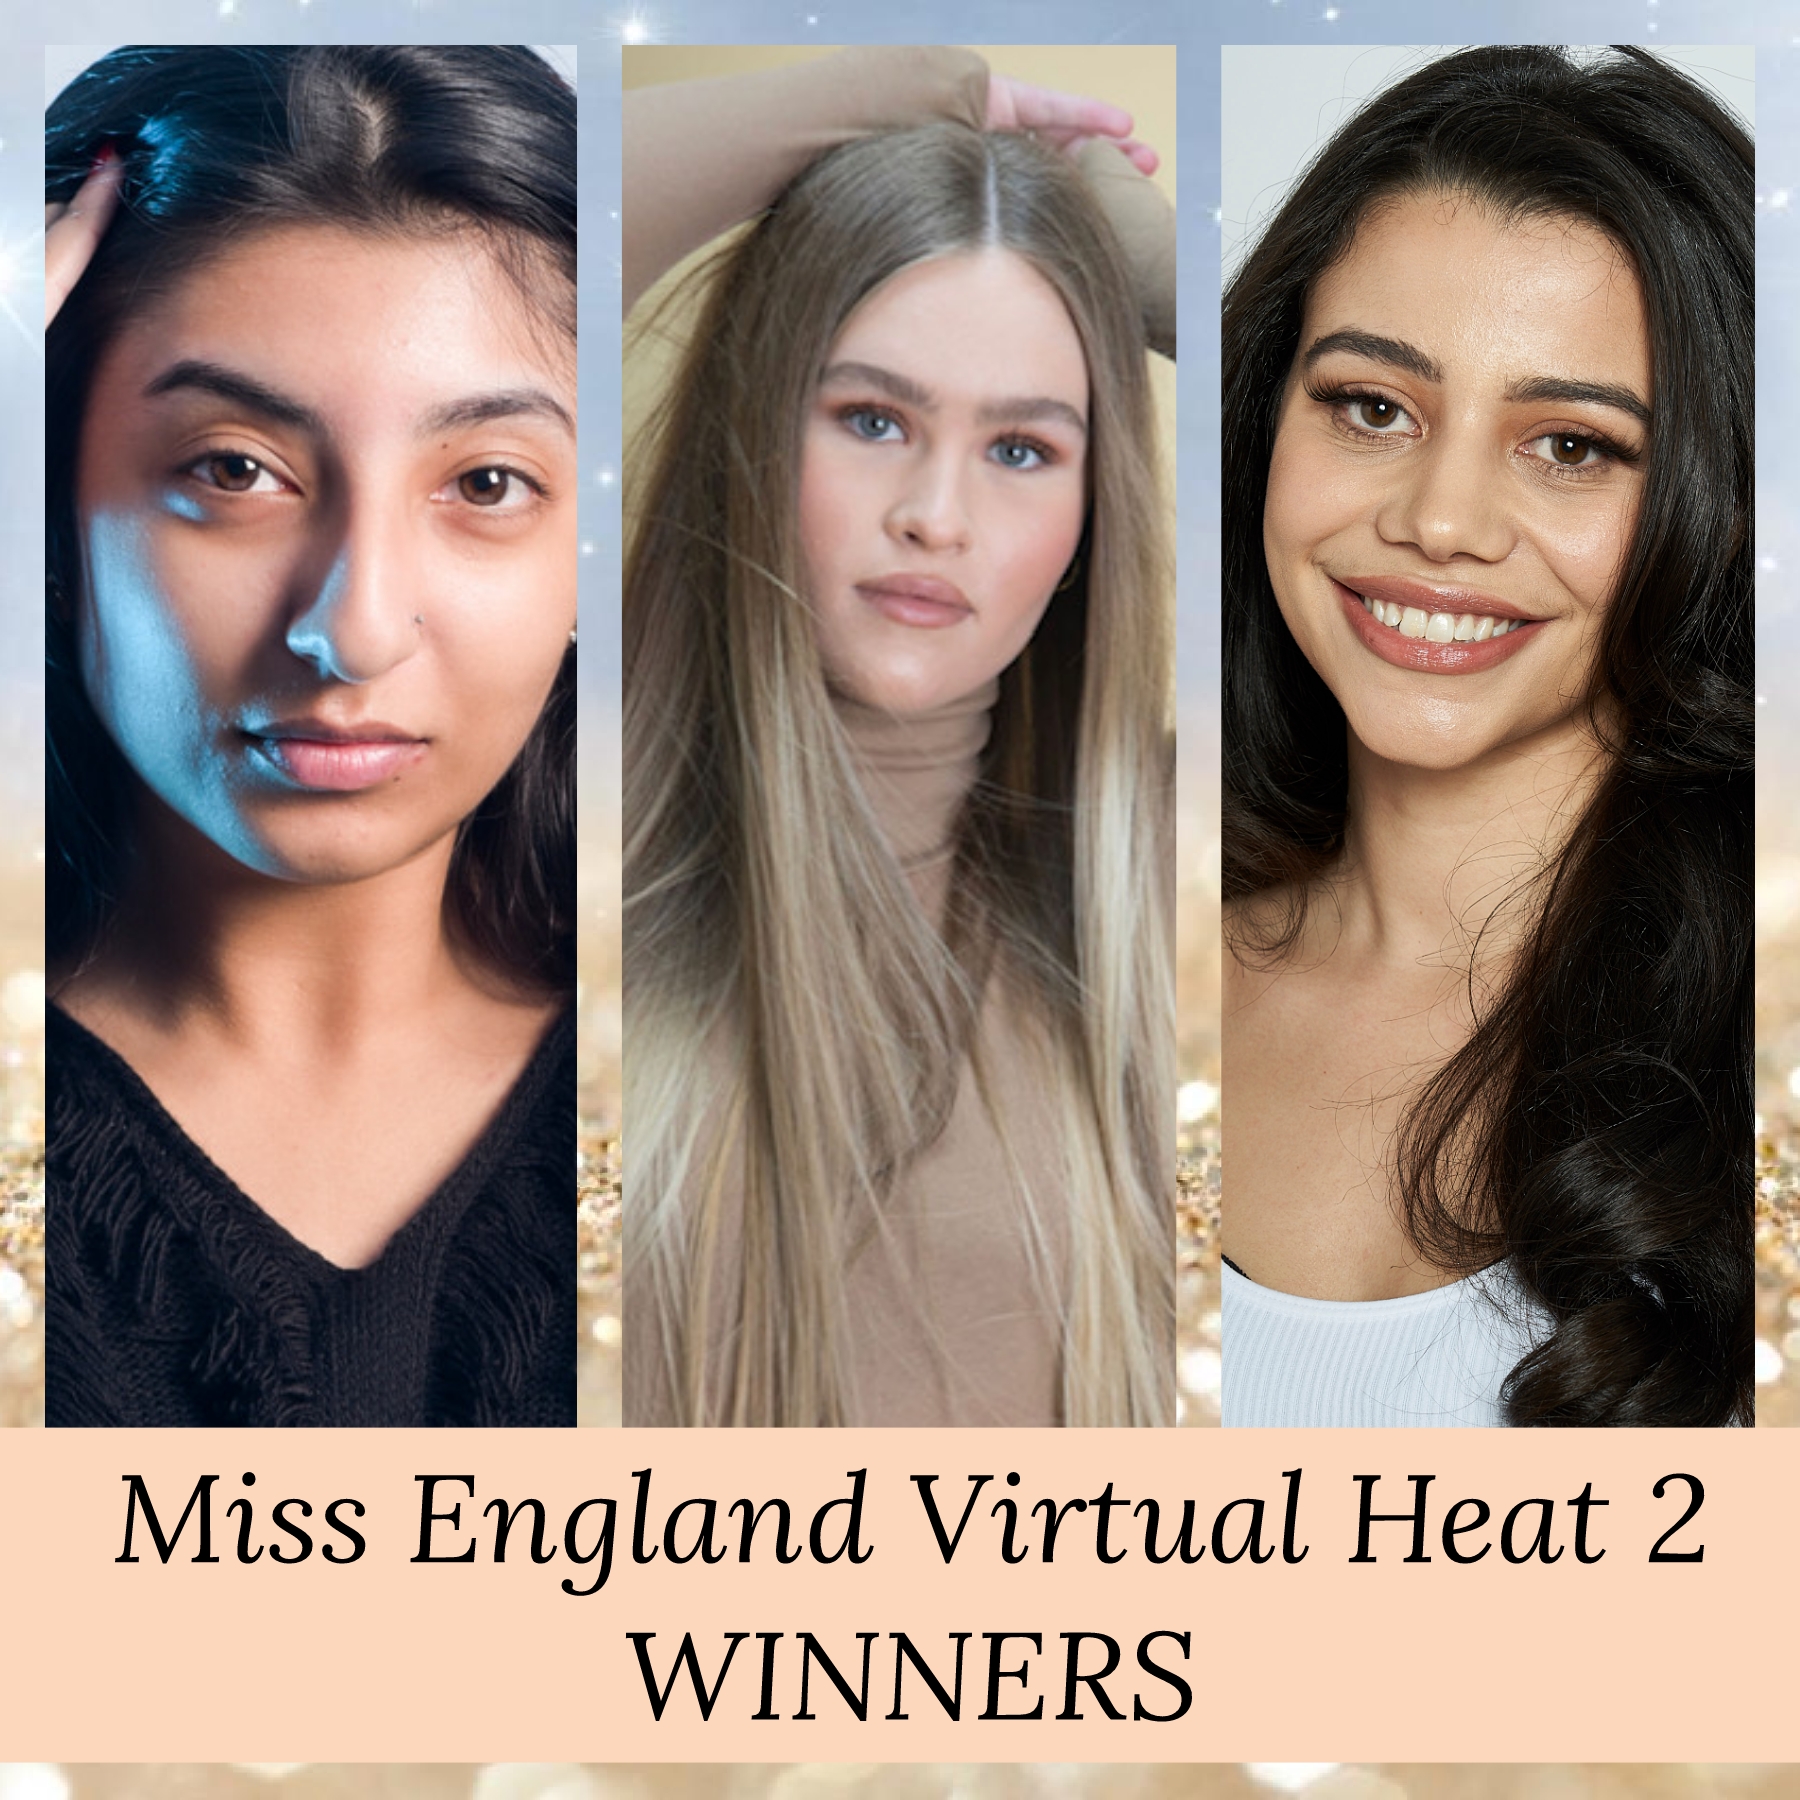 Congratulations to Virtual heat 2 winners